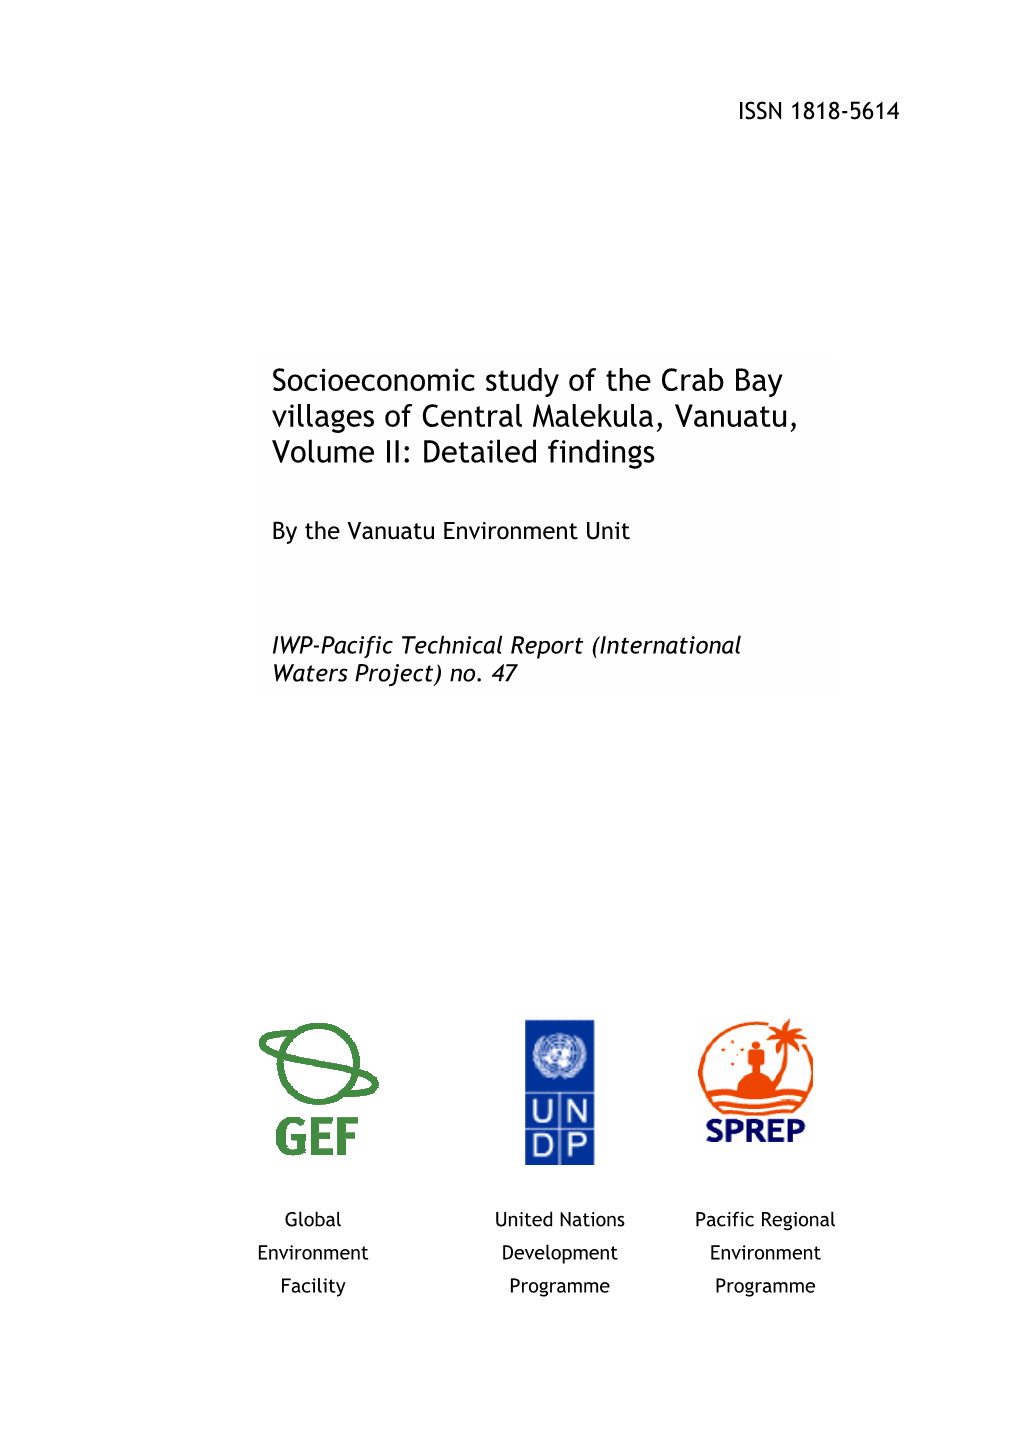 Socioeconomic Study of the Crab Bay Villages of Central Malekula, Vanuatu, Volume II: Detailed Findings